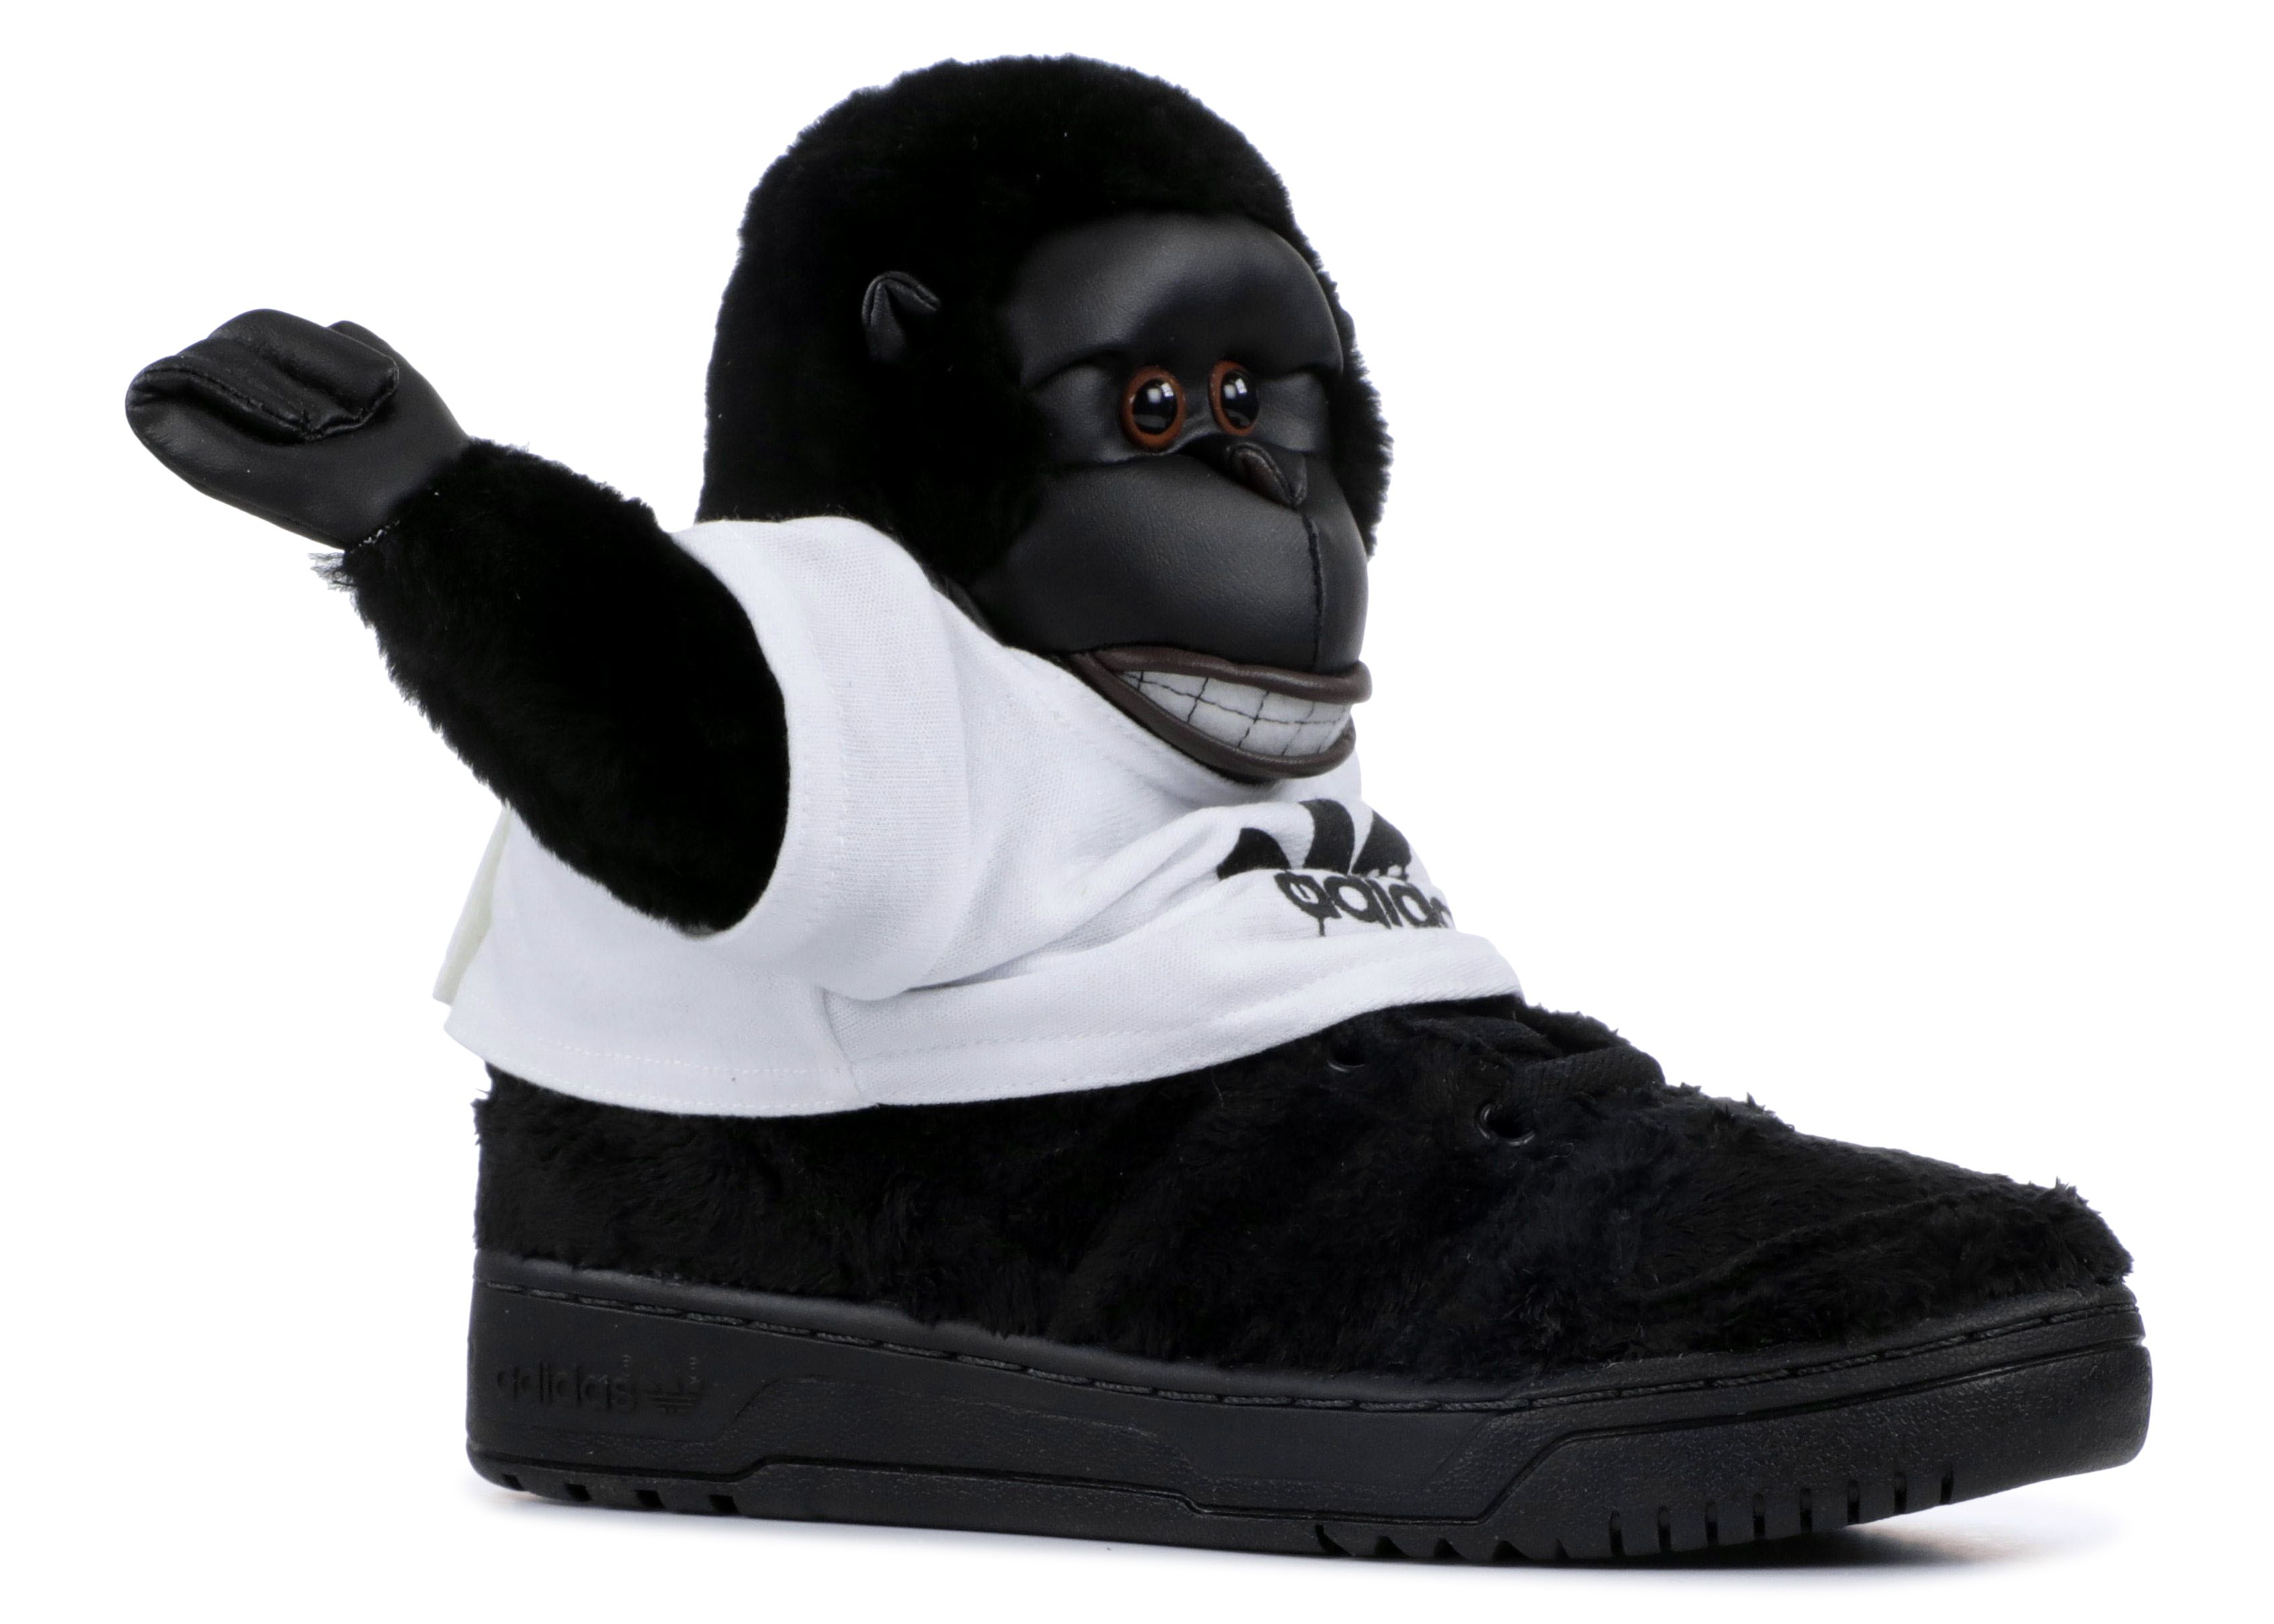 adidas js gorilla